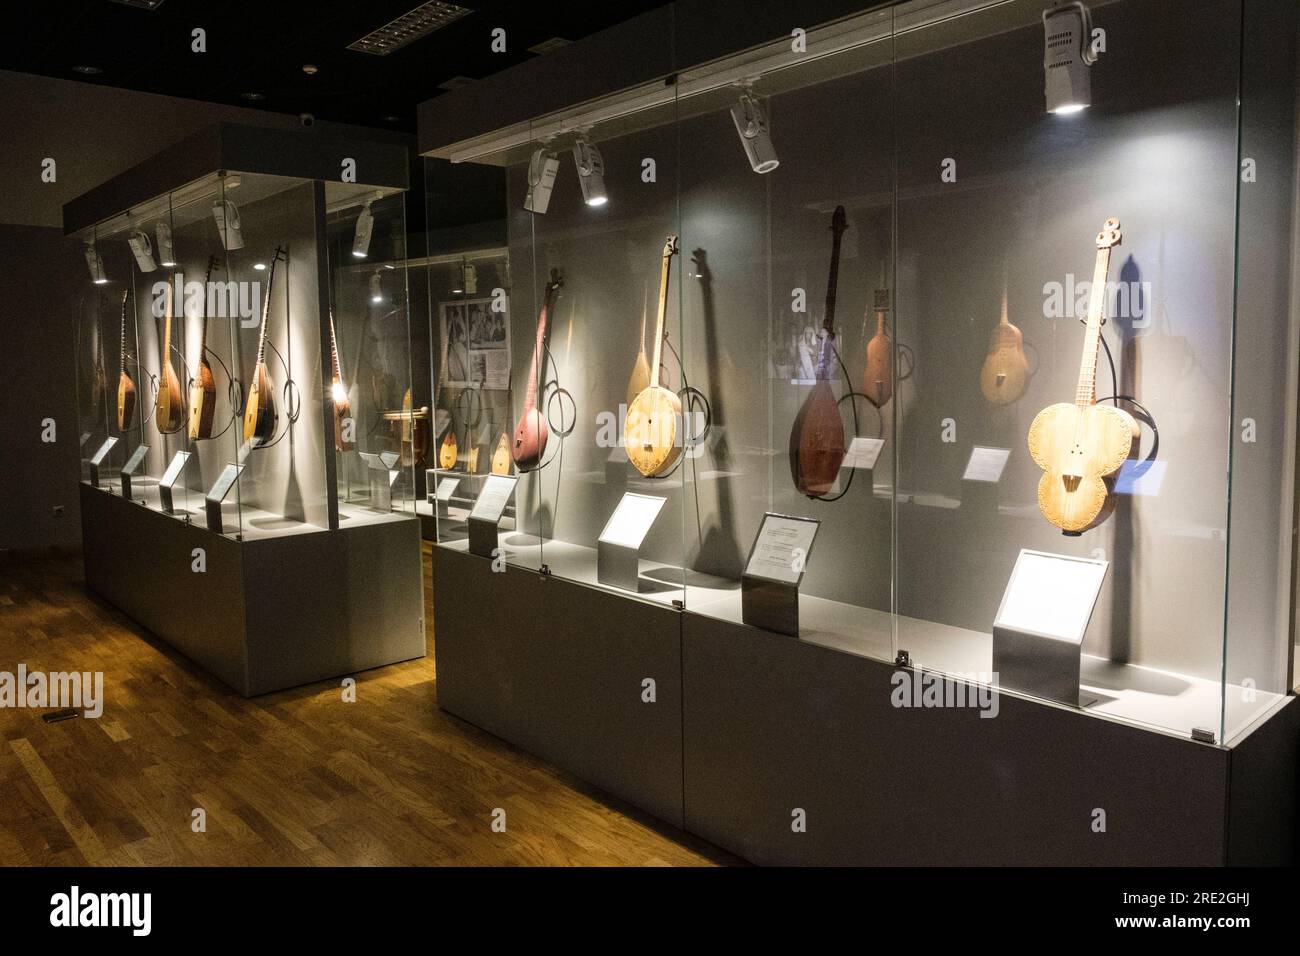 Kazakhstan, Almaty. Dombra Stringed Instruments on Display in the Kazakh Folk Musical Instruments Museum. Stock Photo